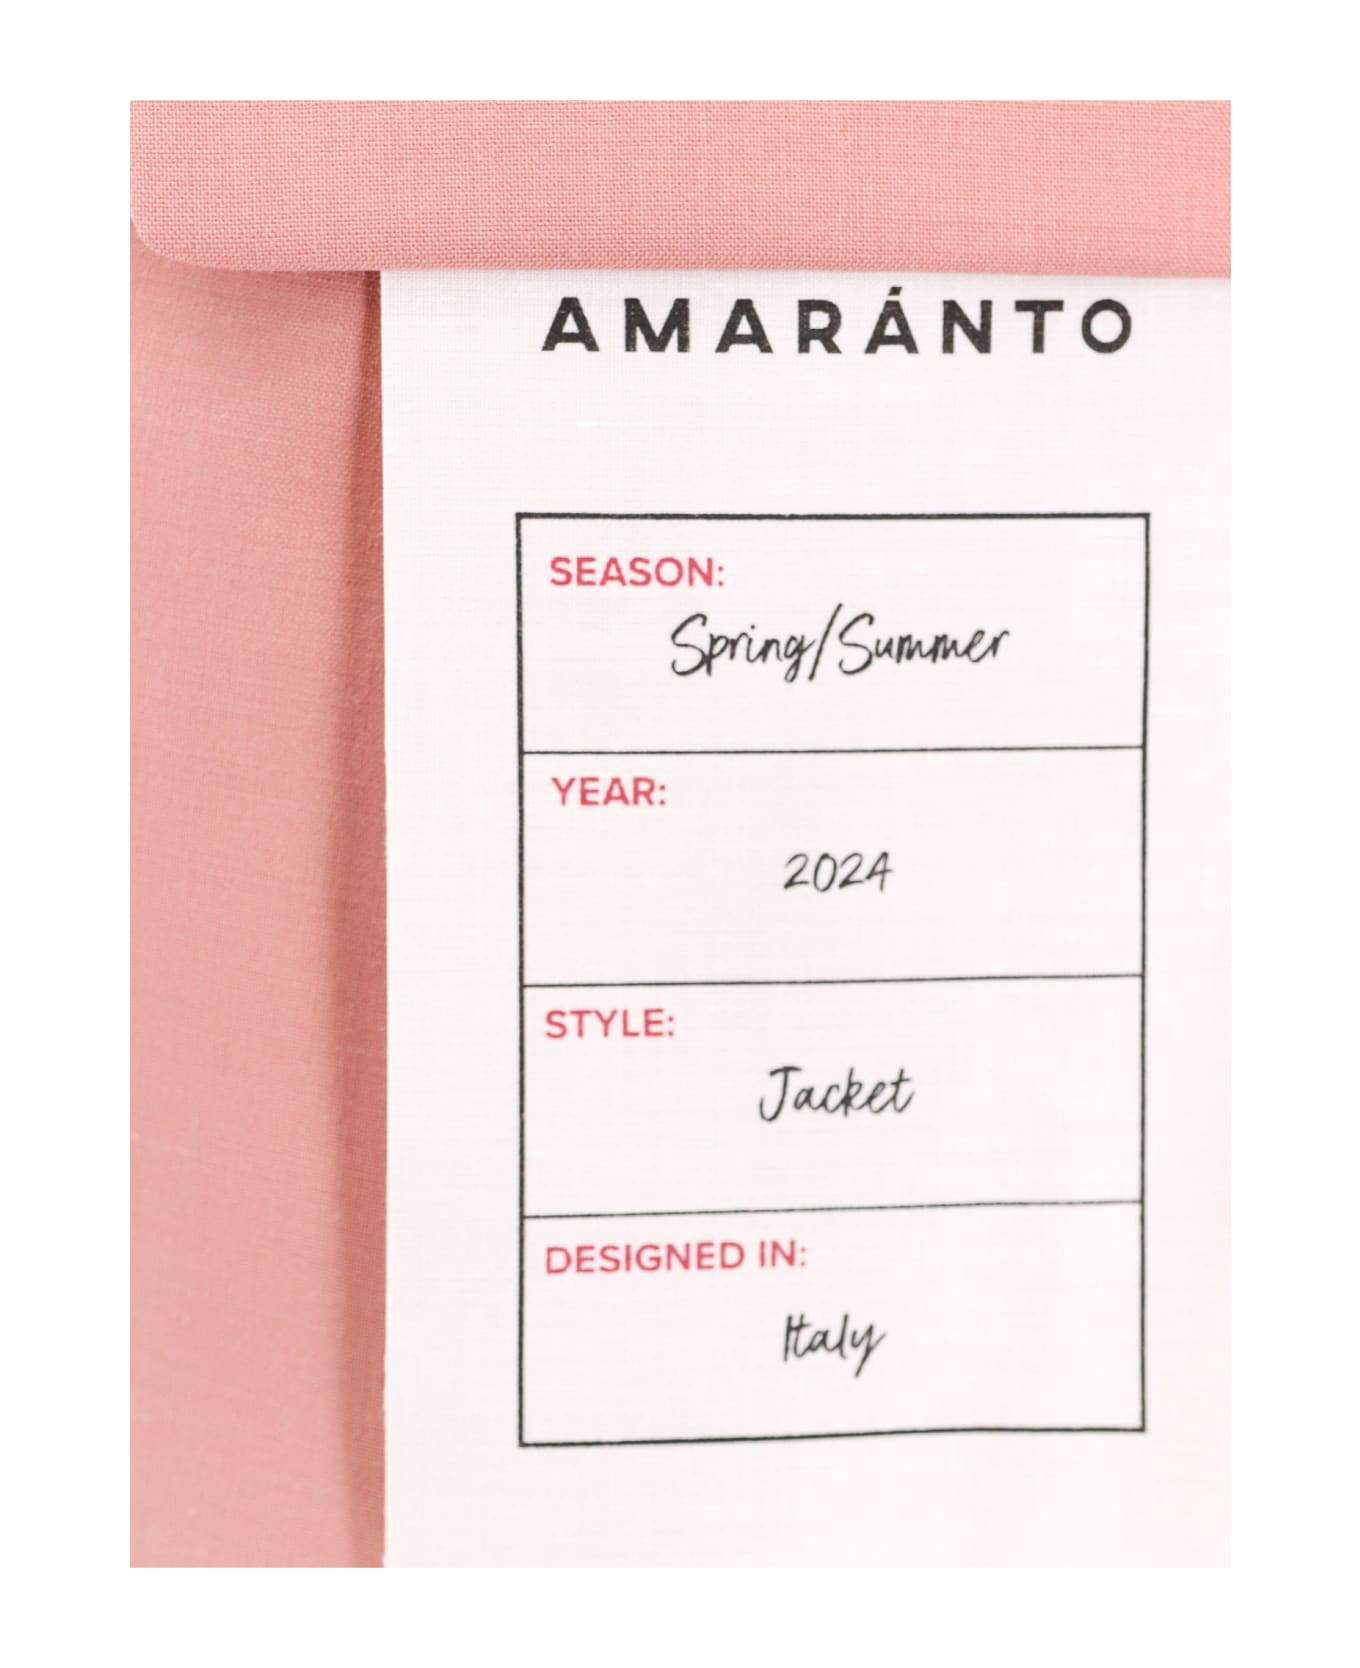 Amaranto Blazer - Pink